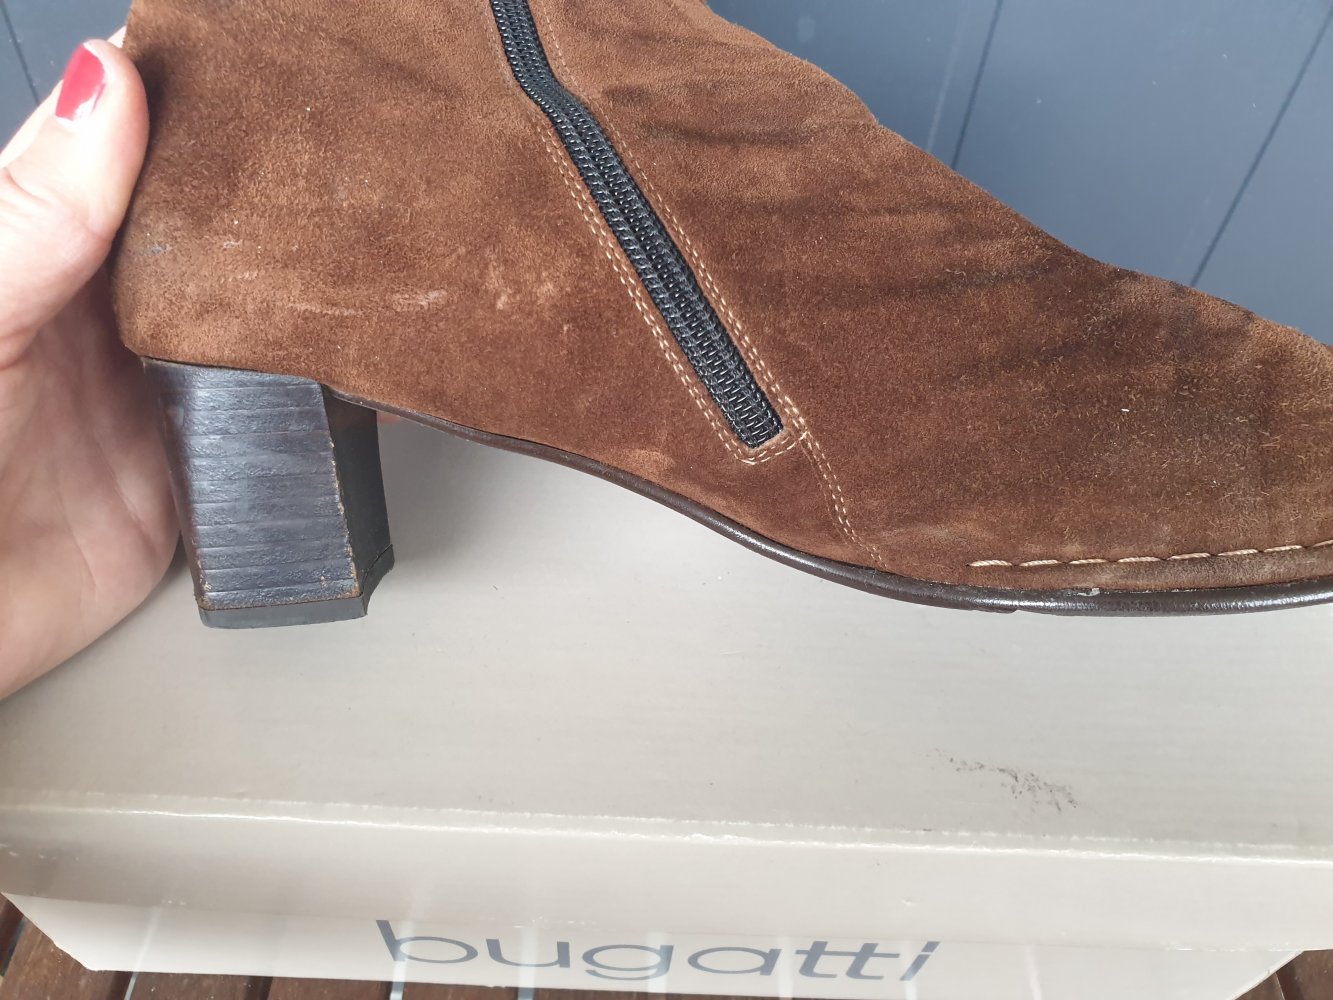 Semler Select: Stiefelette Boots Stiefel braun (Größe 6)